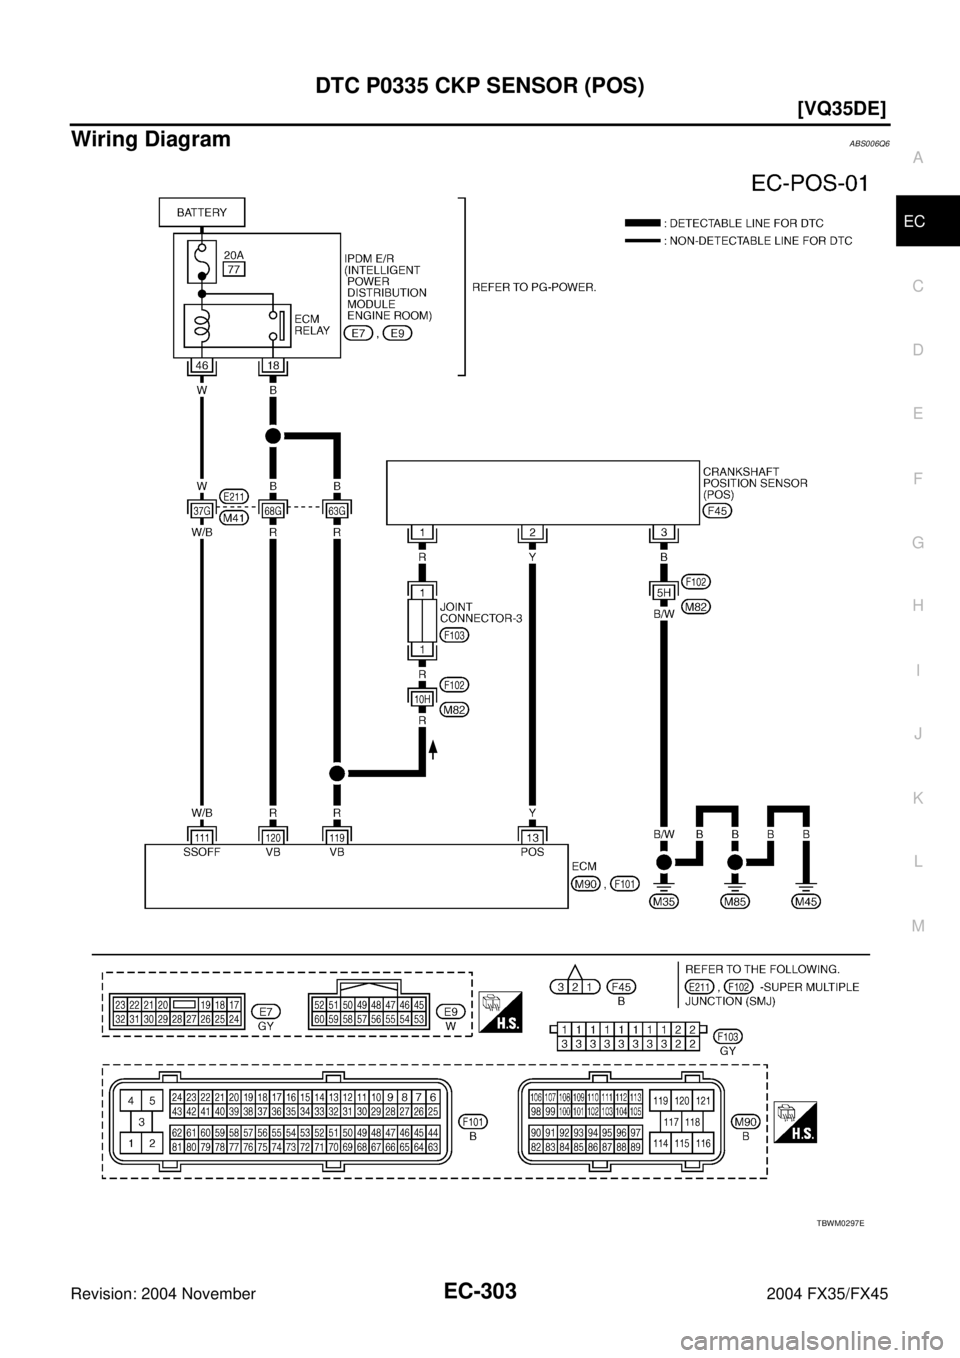 INFINITI FX35 2004  Service Manual DTC P0335 CKP SENSOR (POS)
EC-303
[VQ35DE]
C
D
E
F
G
H
I
J
K
L
MA
EC
Revision: 2004 November 2004 FX35/FX45
Wiring DiagramABS006Q6
TBWM0297E 